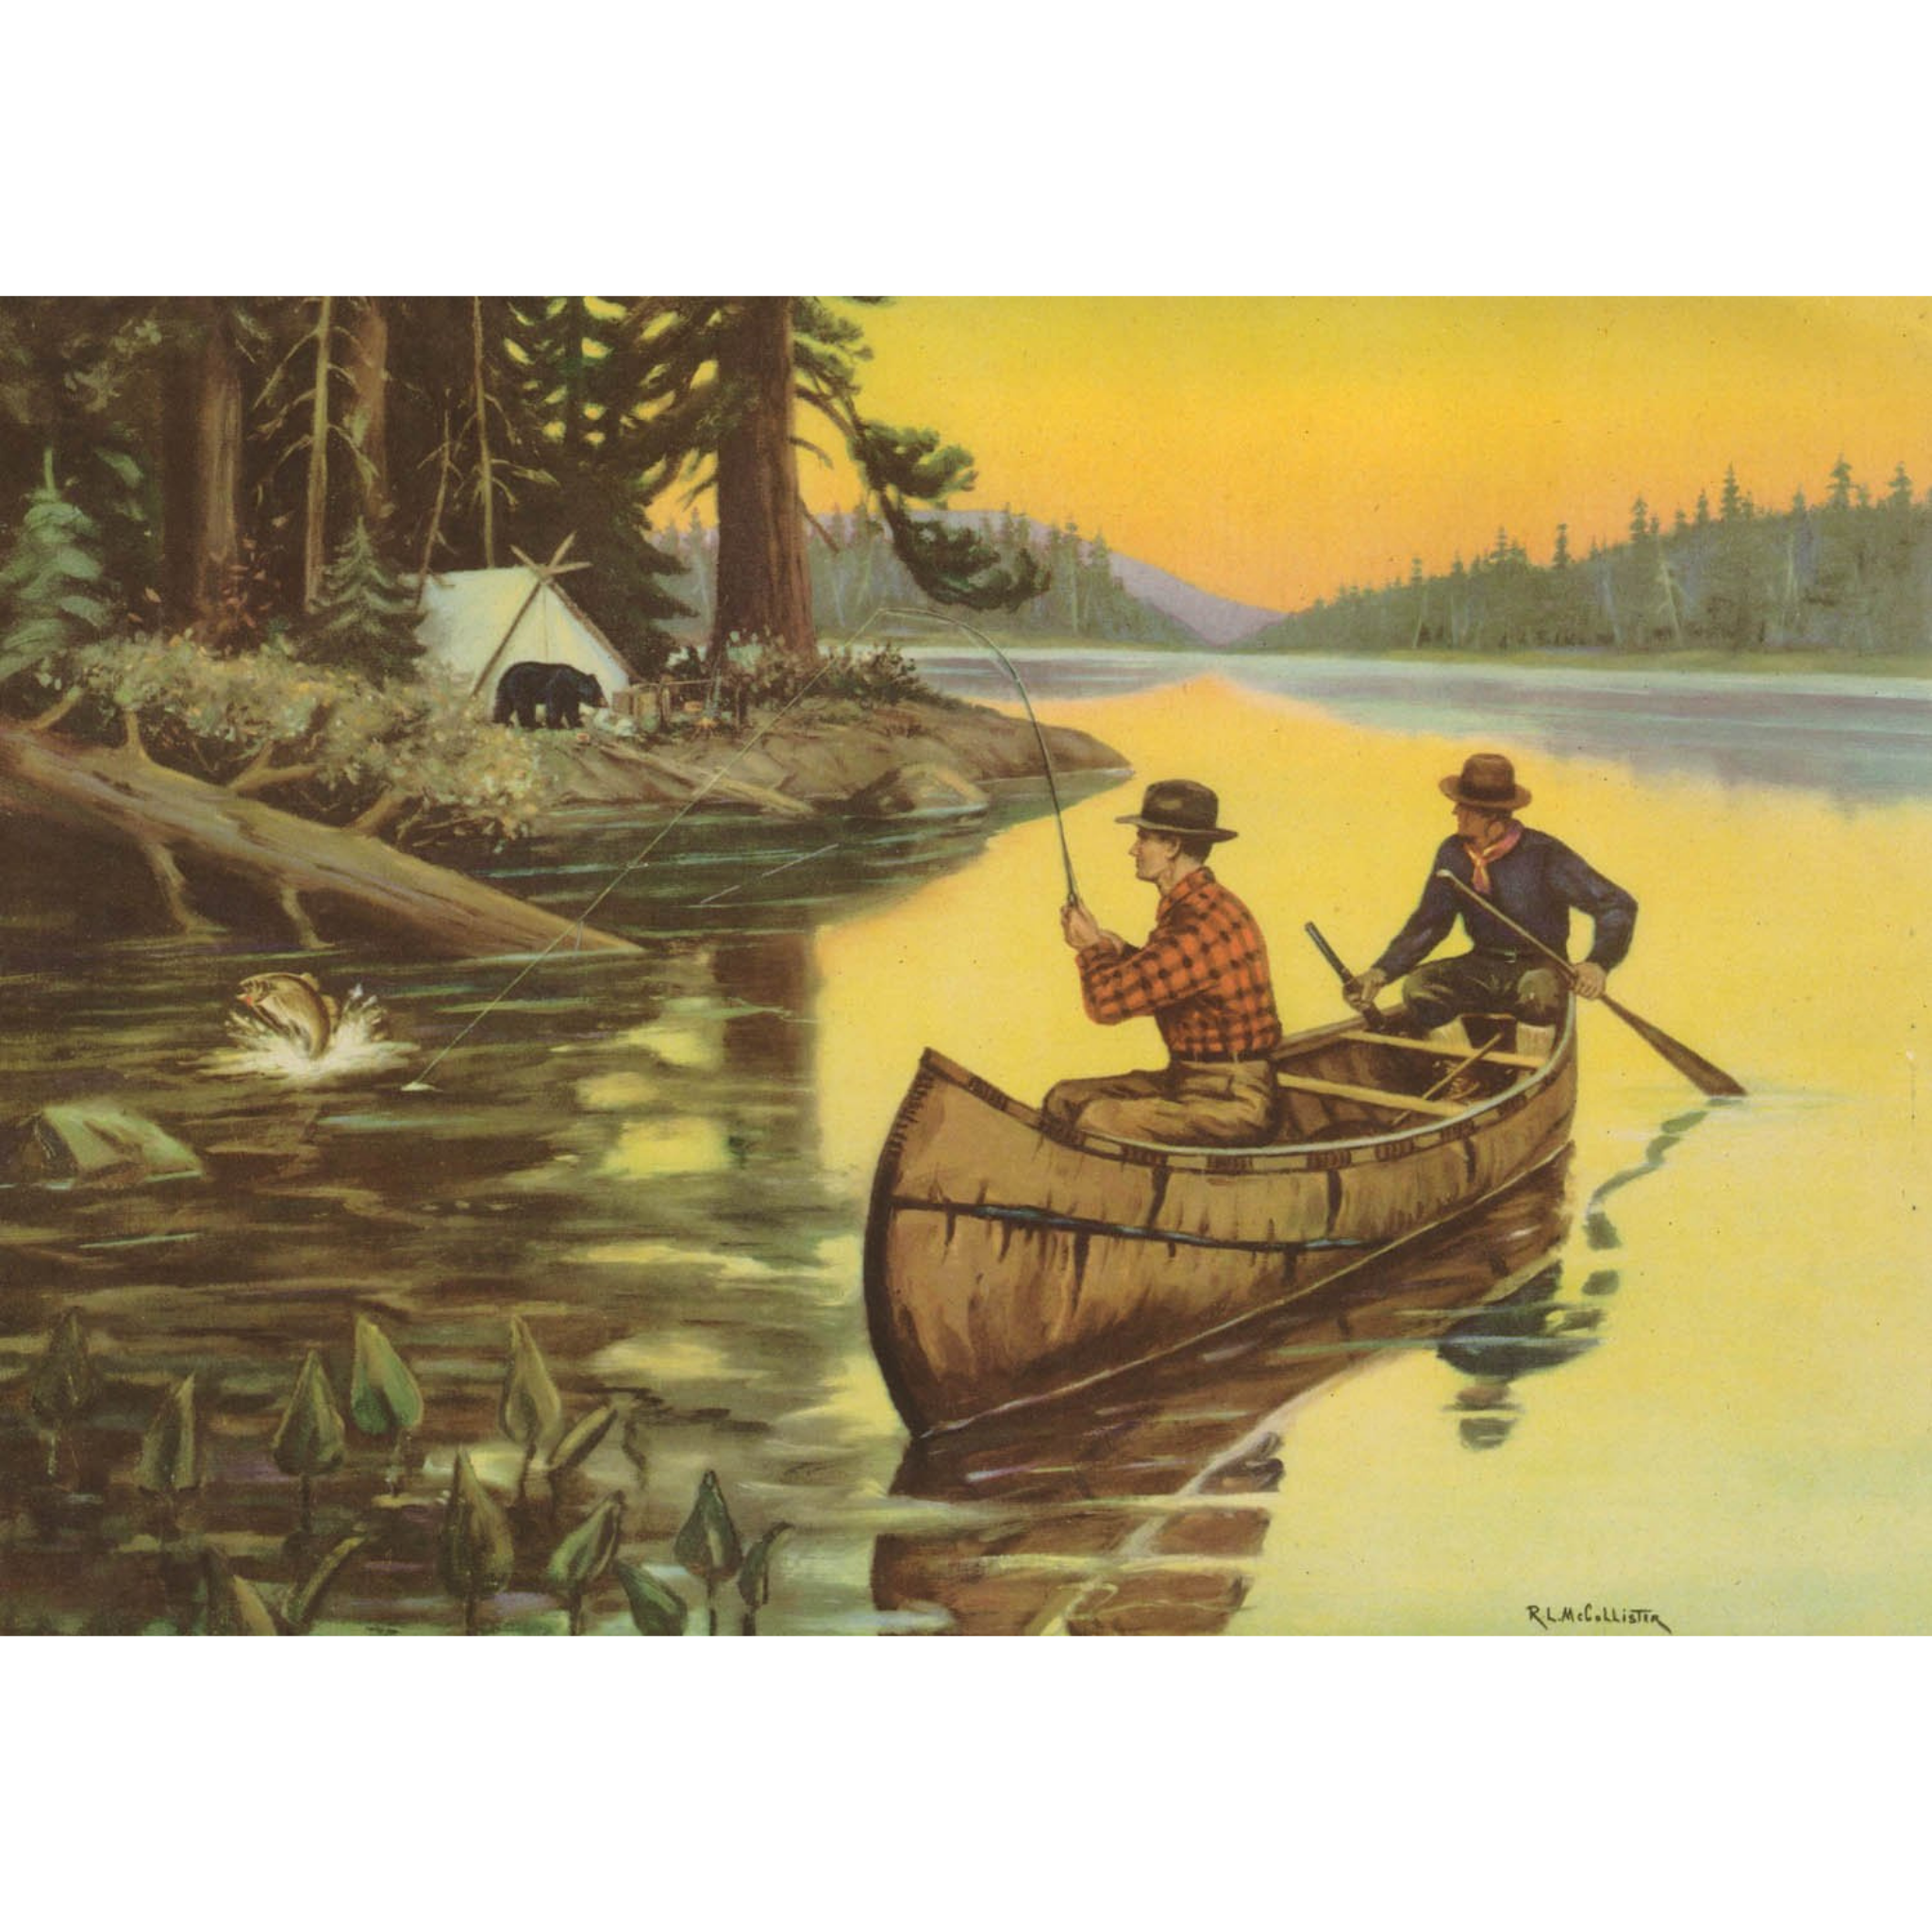 Men Fishing in Canoe Bear in Camp - ca. 1950 R. McCallister Lithograph